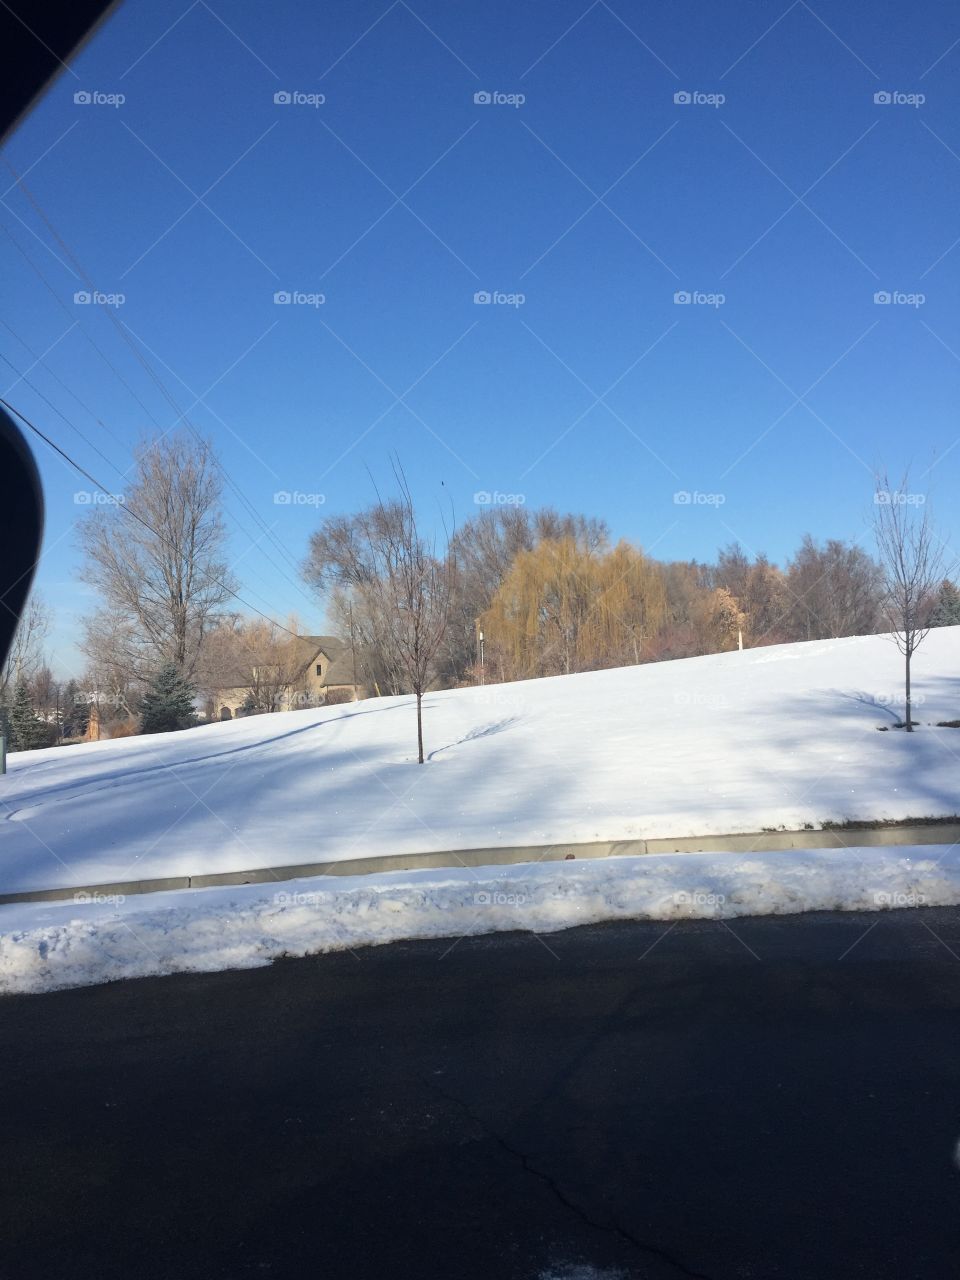 Winter, Snow, Cold, Landscape, Road